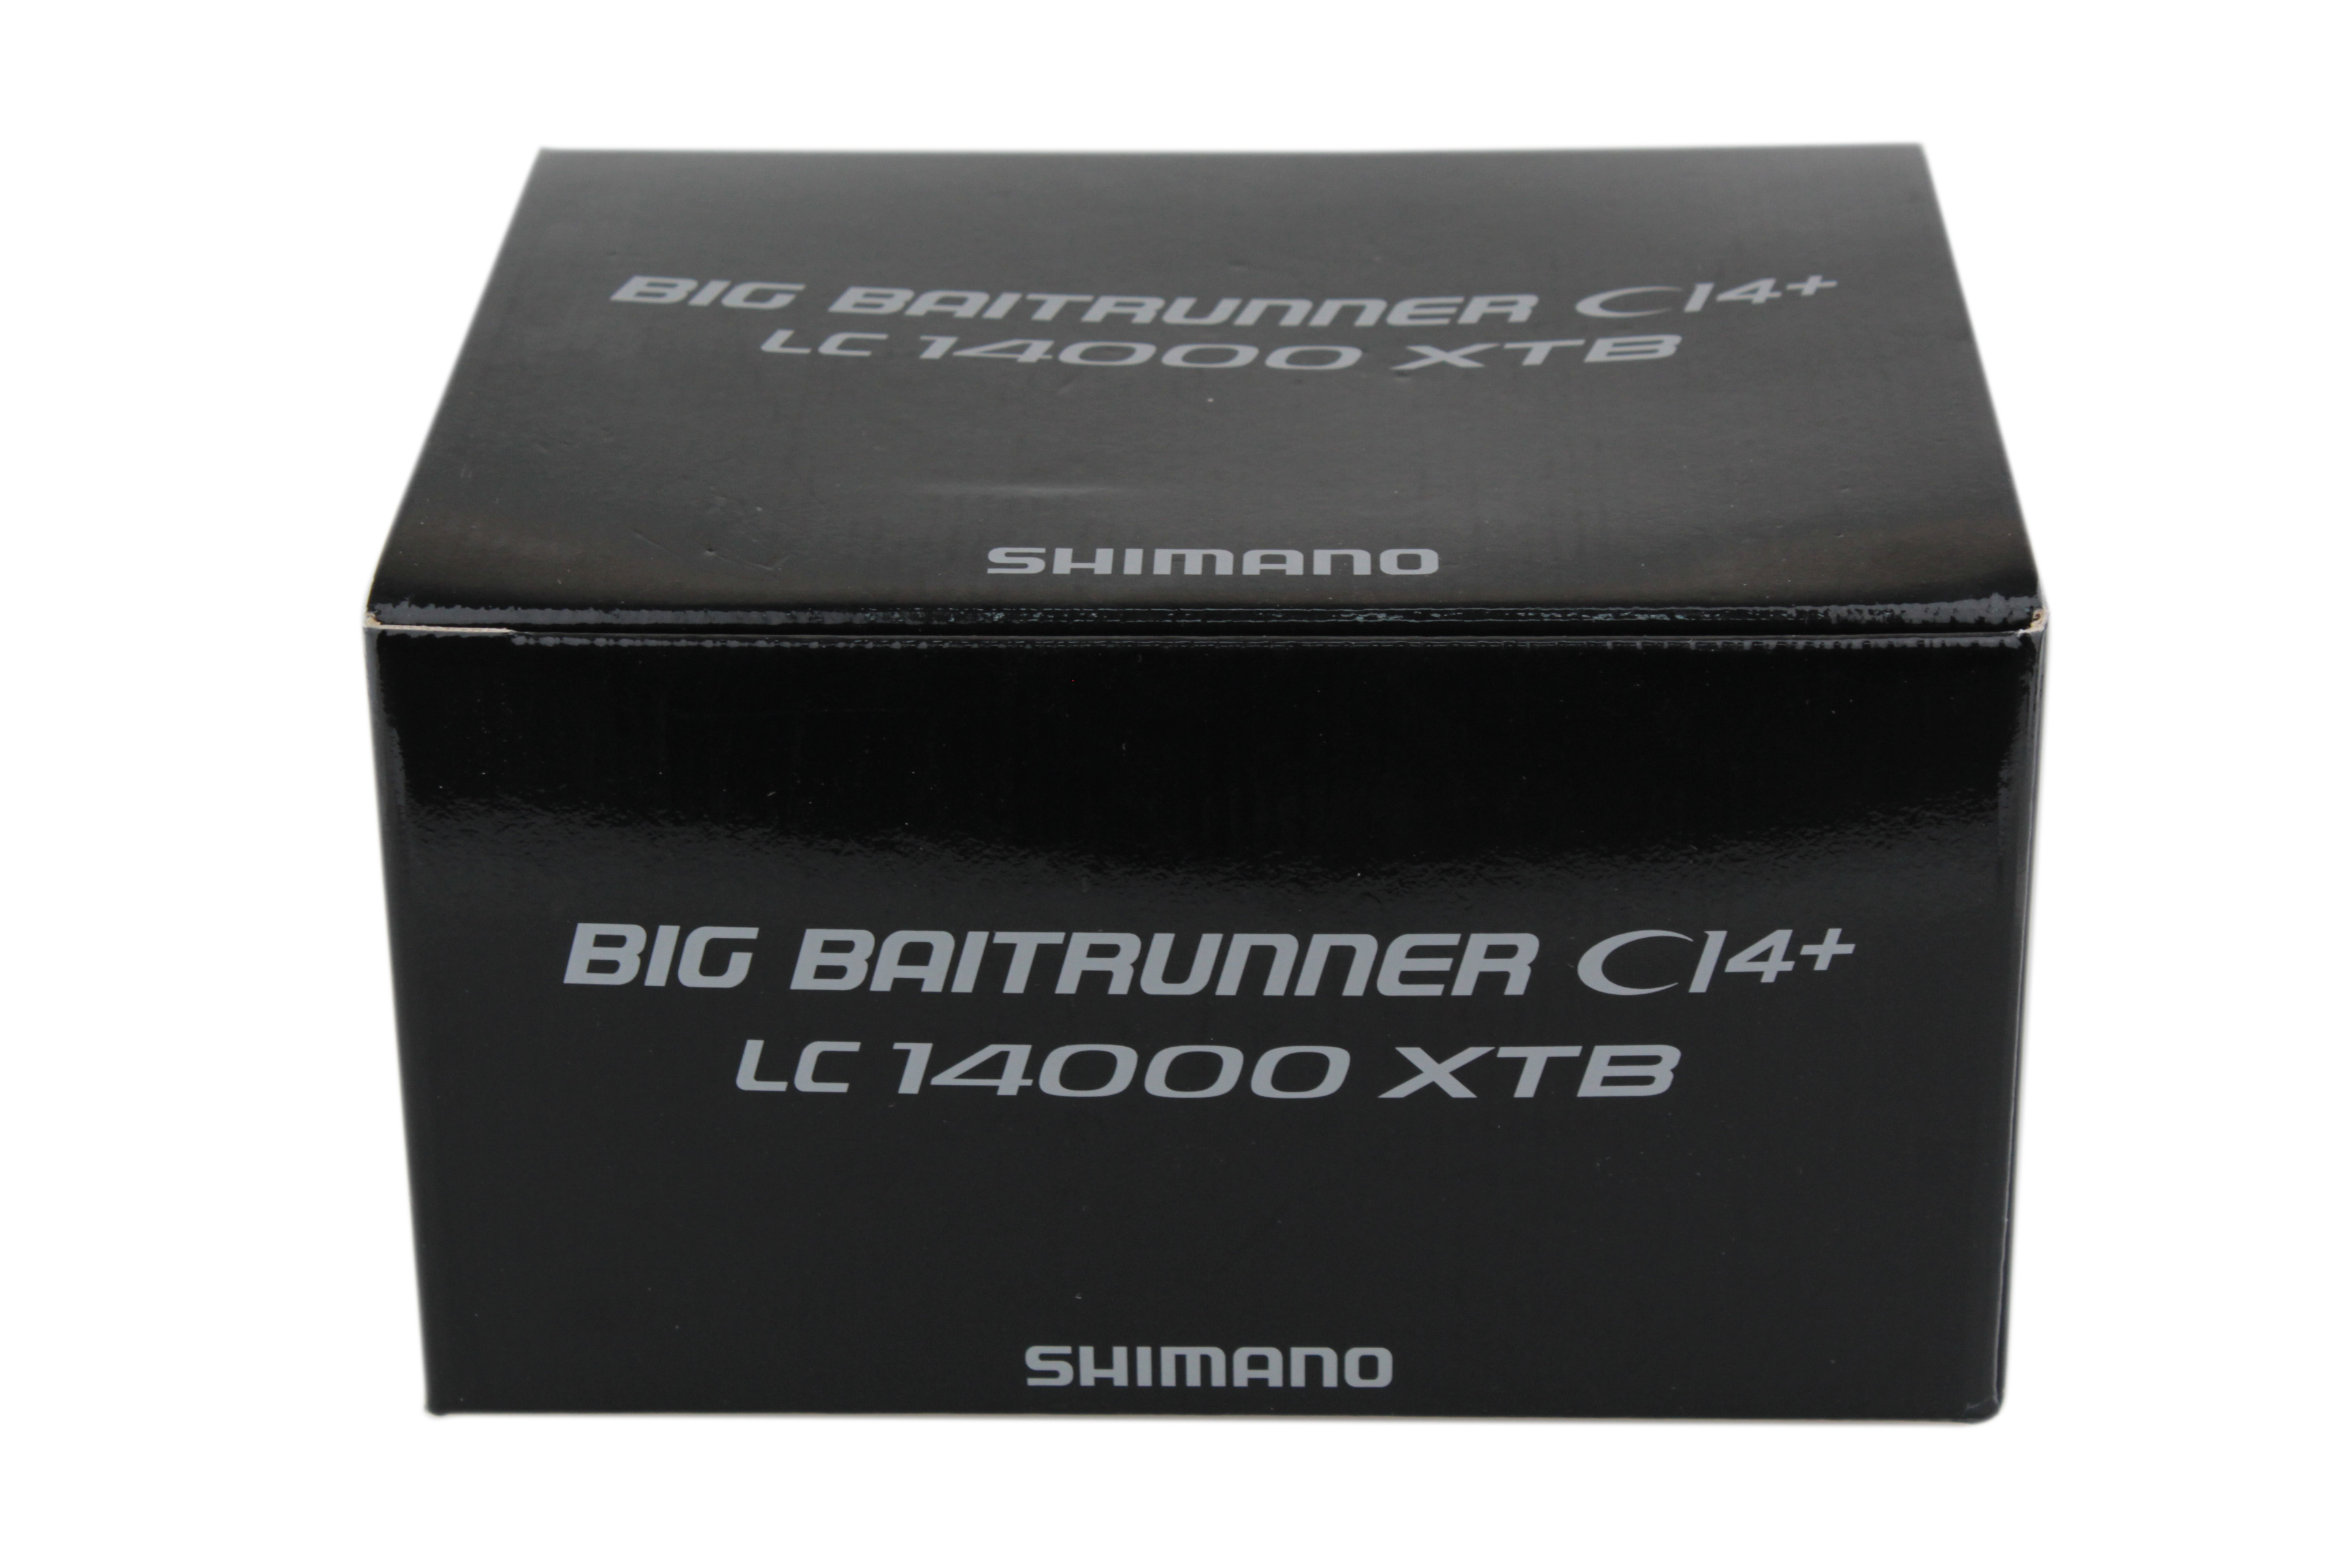 Катушка Shimano Big baitrunner XTR-B LC 14000 XTB